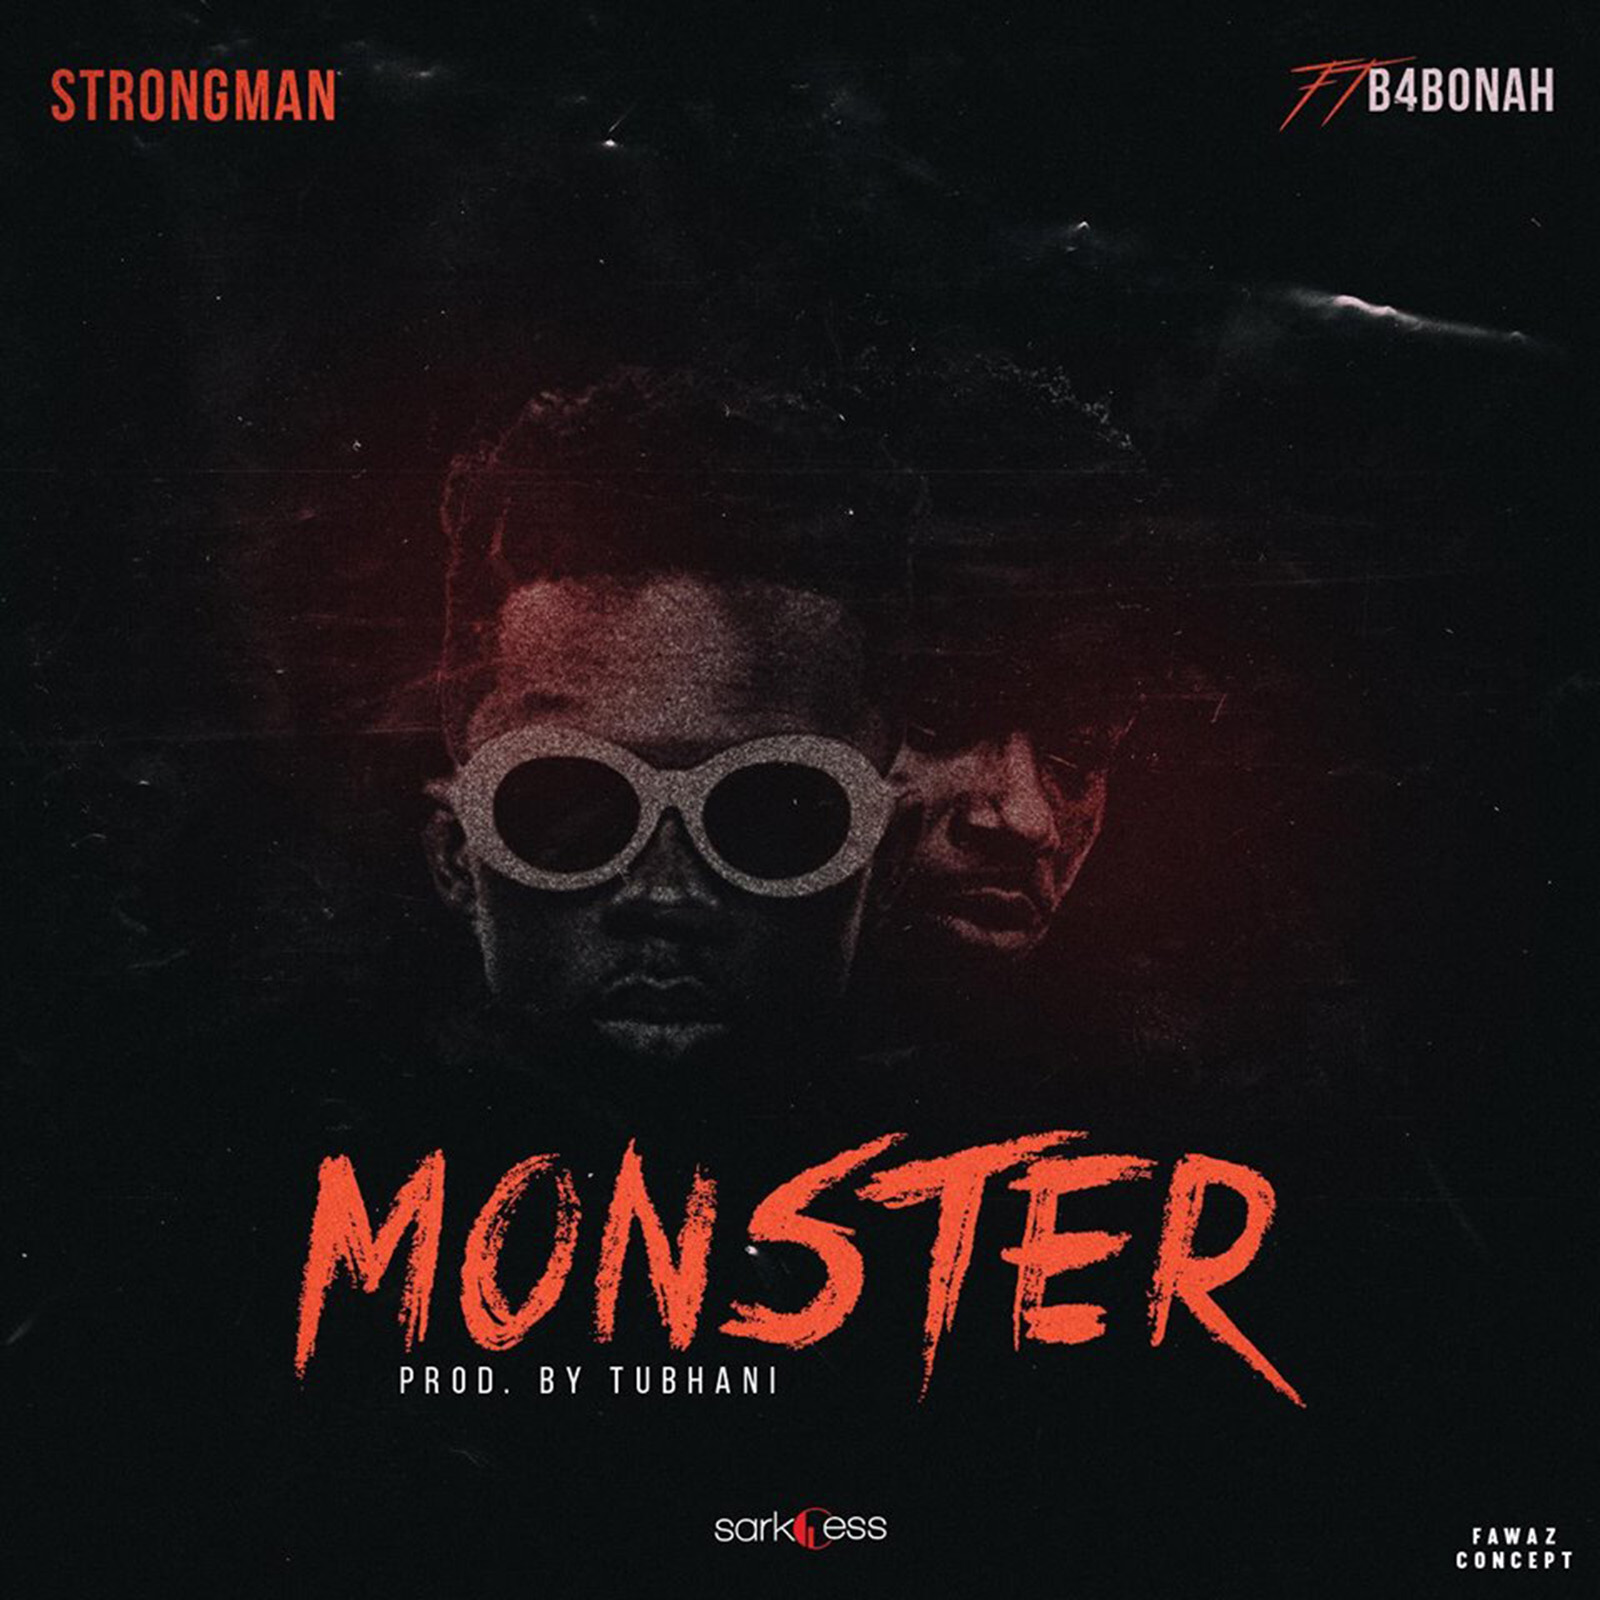 Monster by Strongman Burner feat. B4Bonah